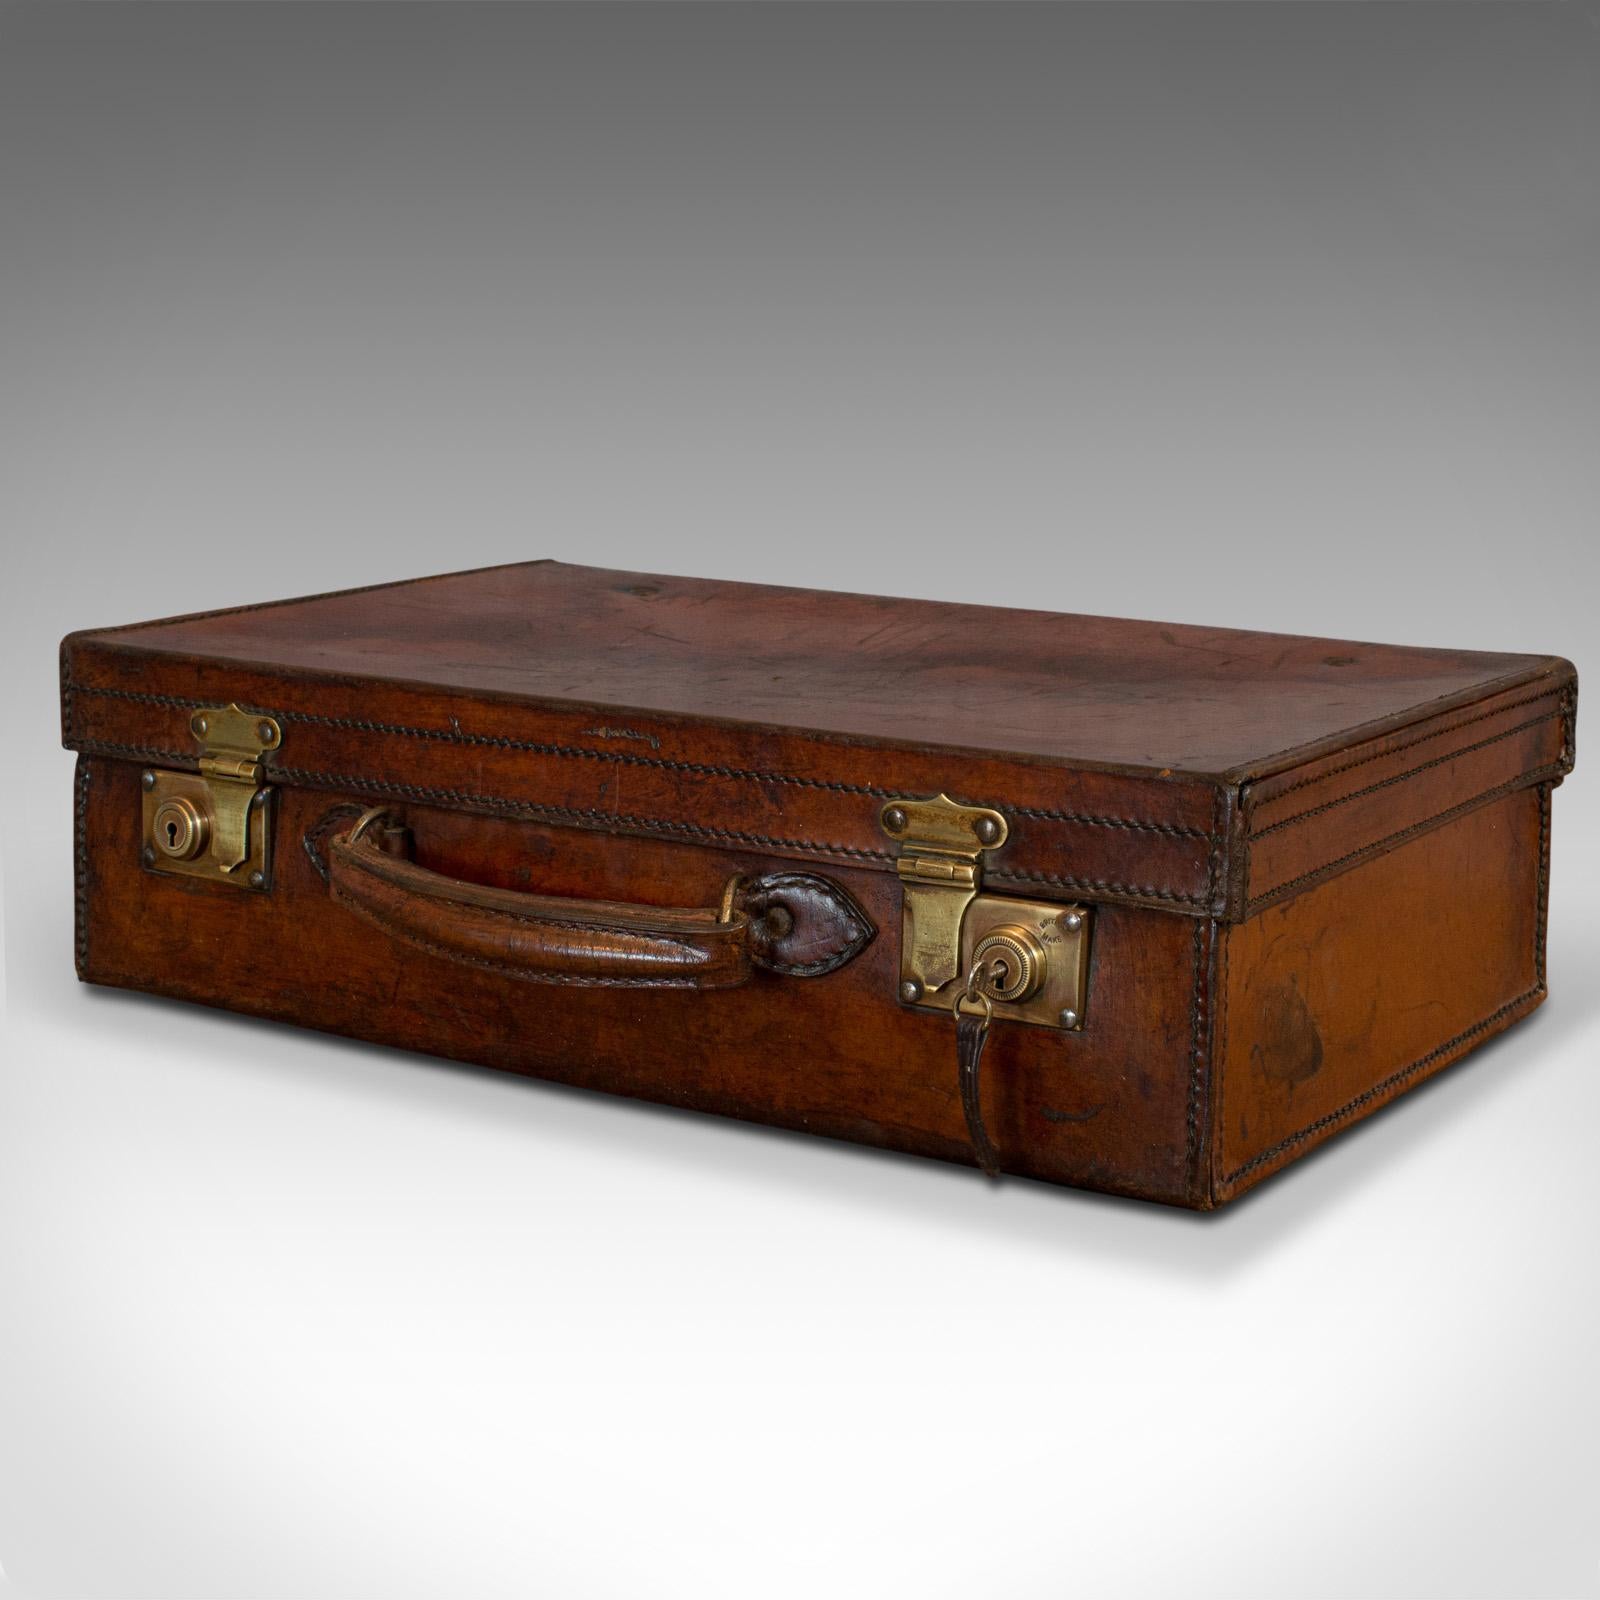 20th Century Antique Travel Case, English, Leather Banker's Suitcase, Edwardian, circa 1910